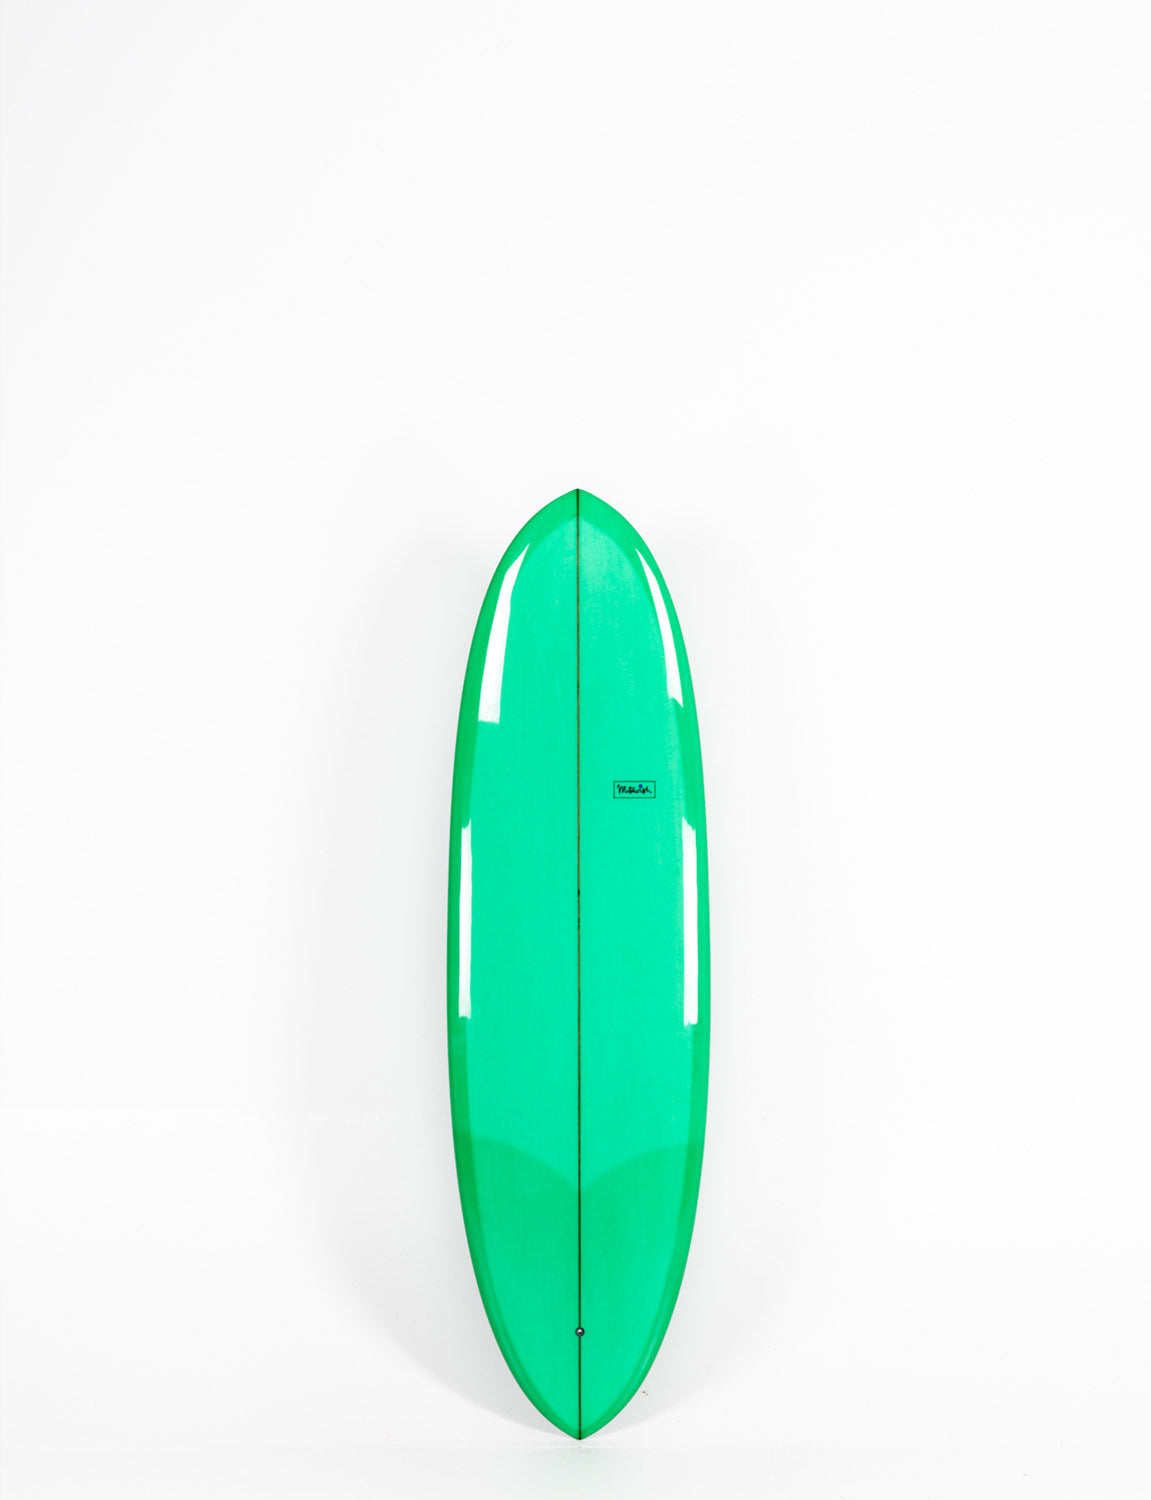 Pukas Surf Shop - McTavish Surfboards - DIAMOND SEA by Bob McTavish- 6´1 x 20 1/2 x 2 3/4 - BM00566